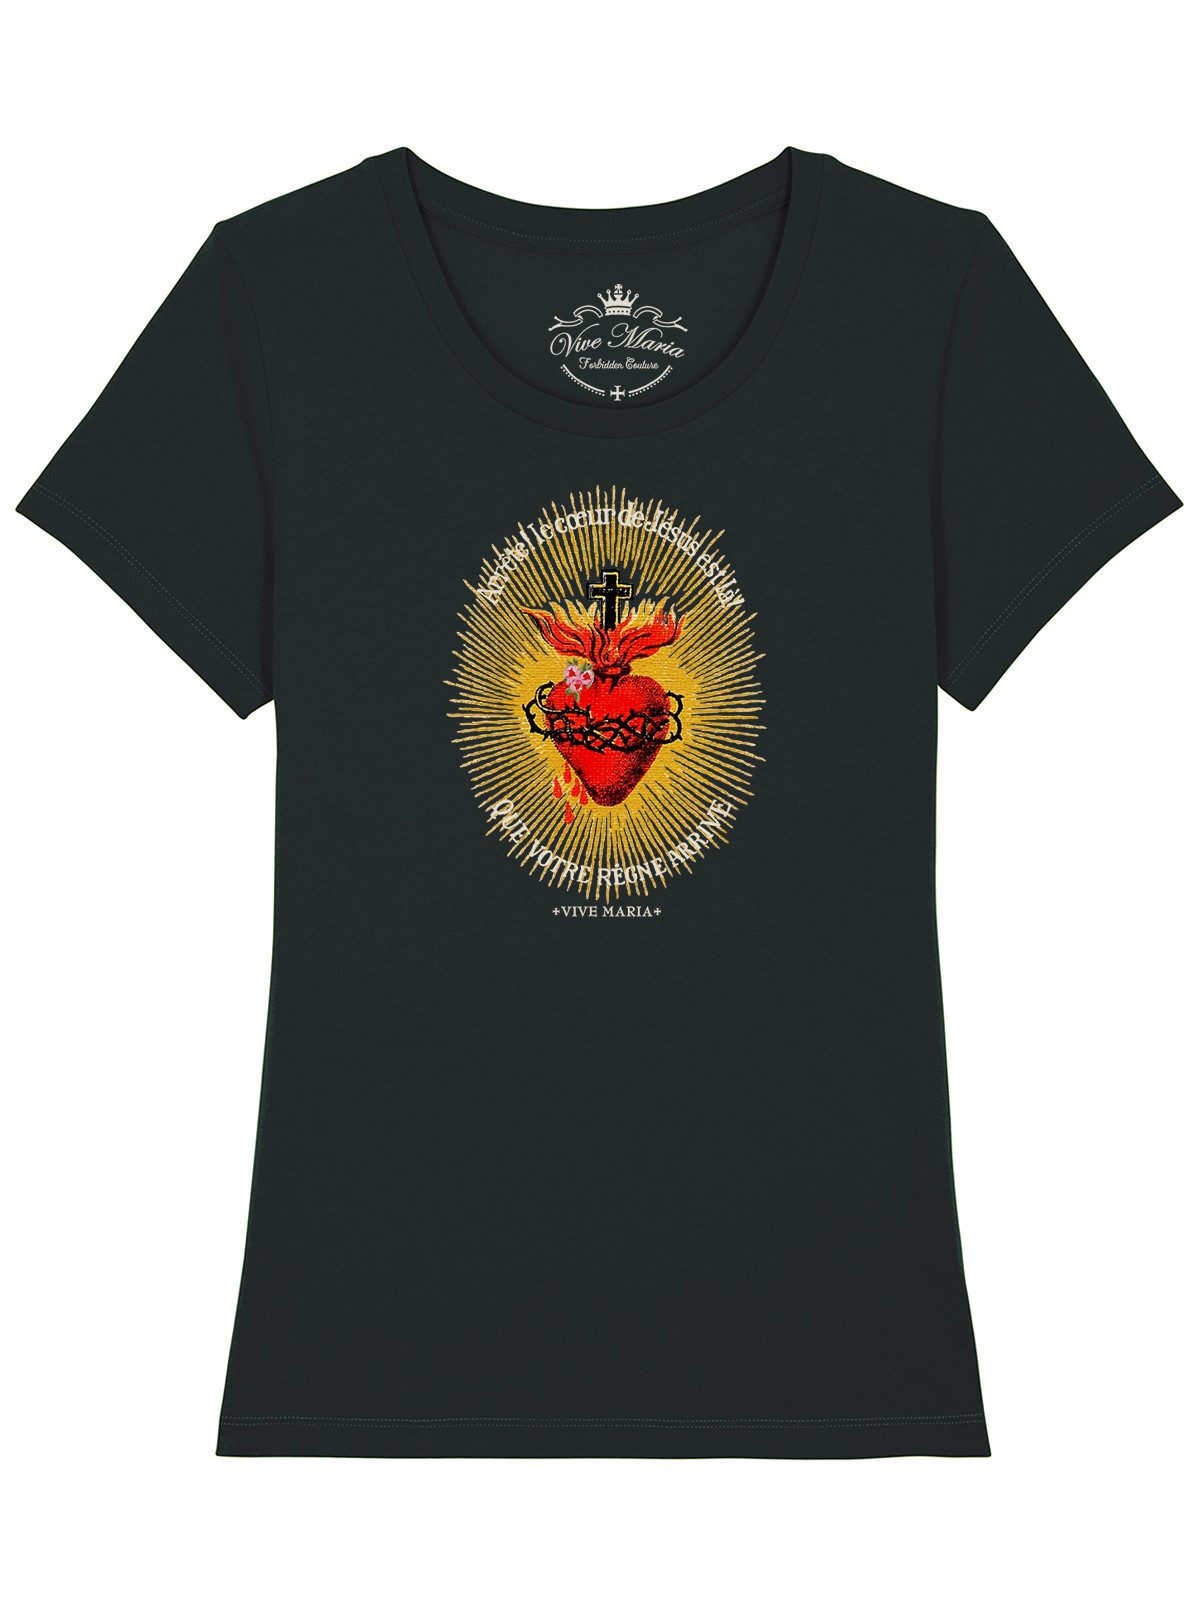 Vive Maria T-Shirt Burning Heart